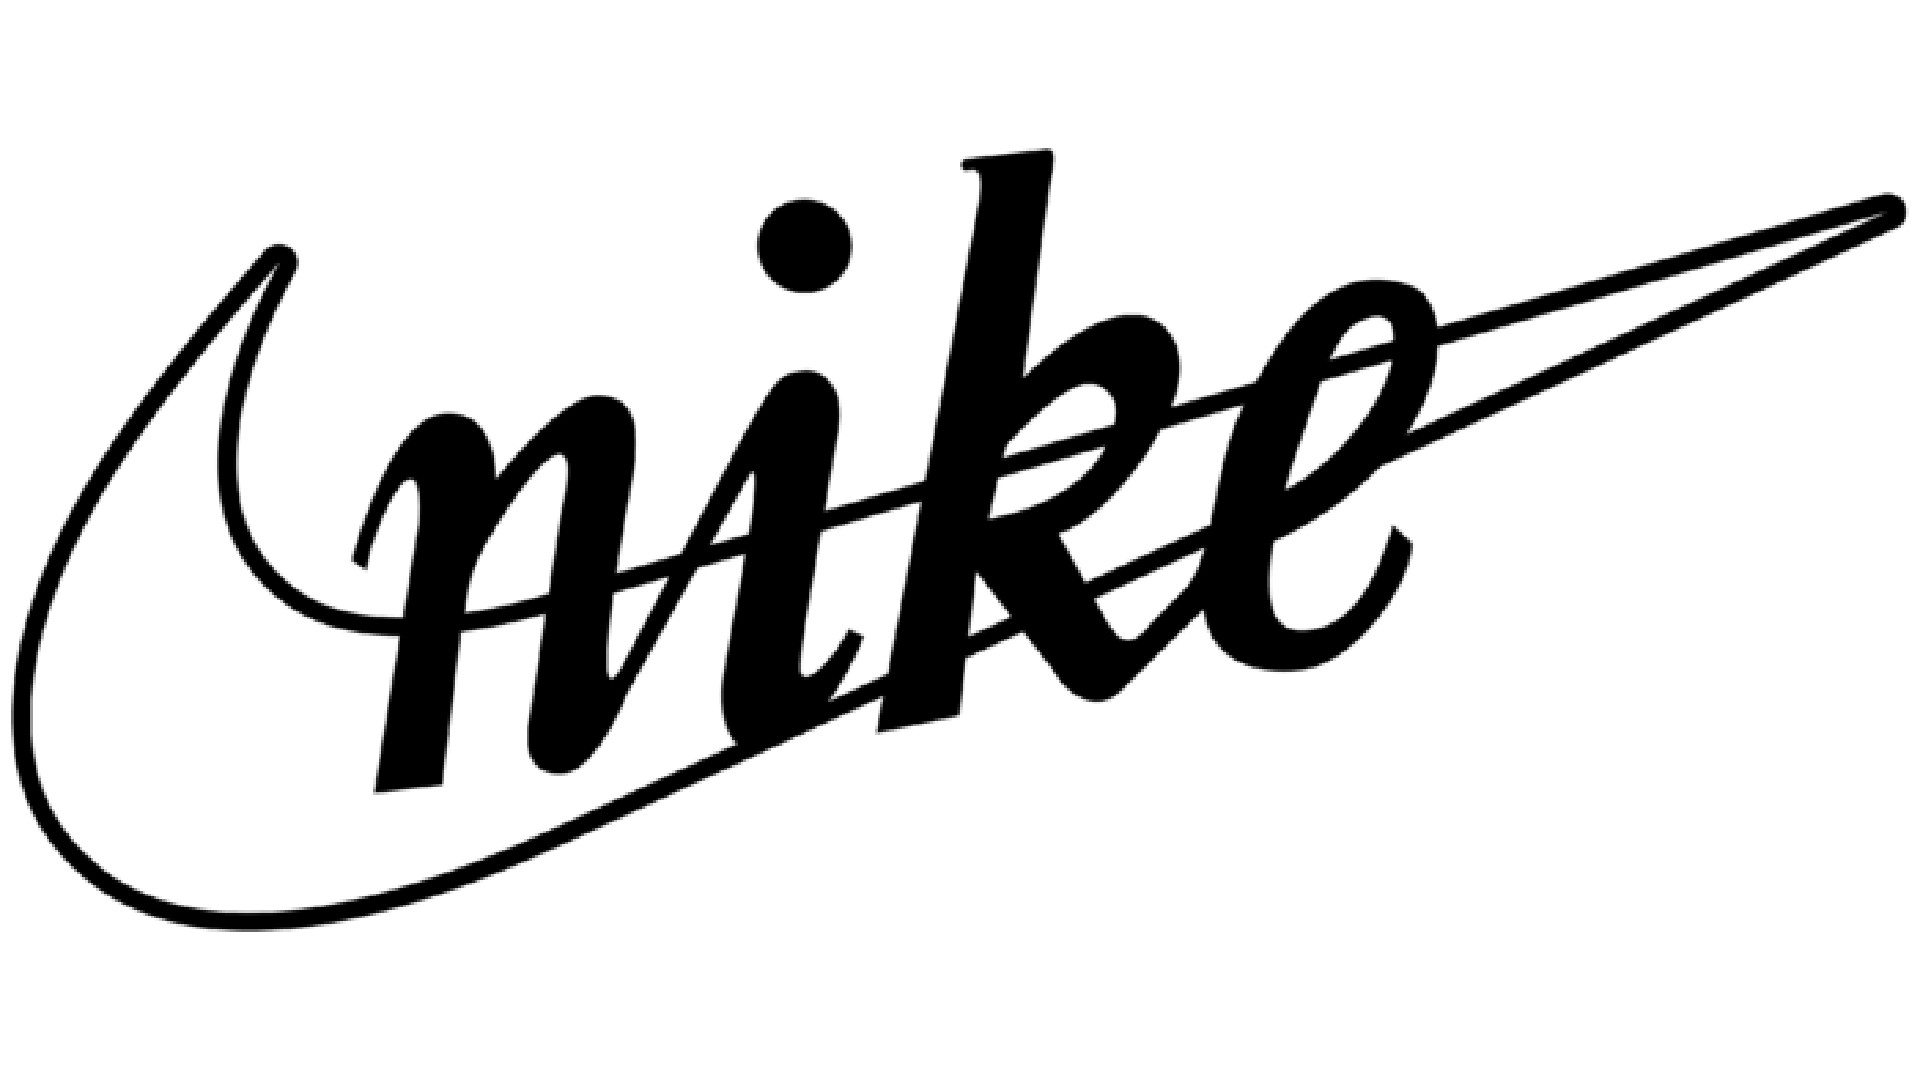 Logotipo de Nike 1971